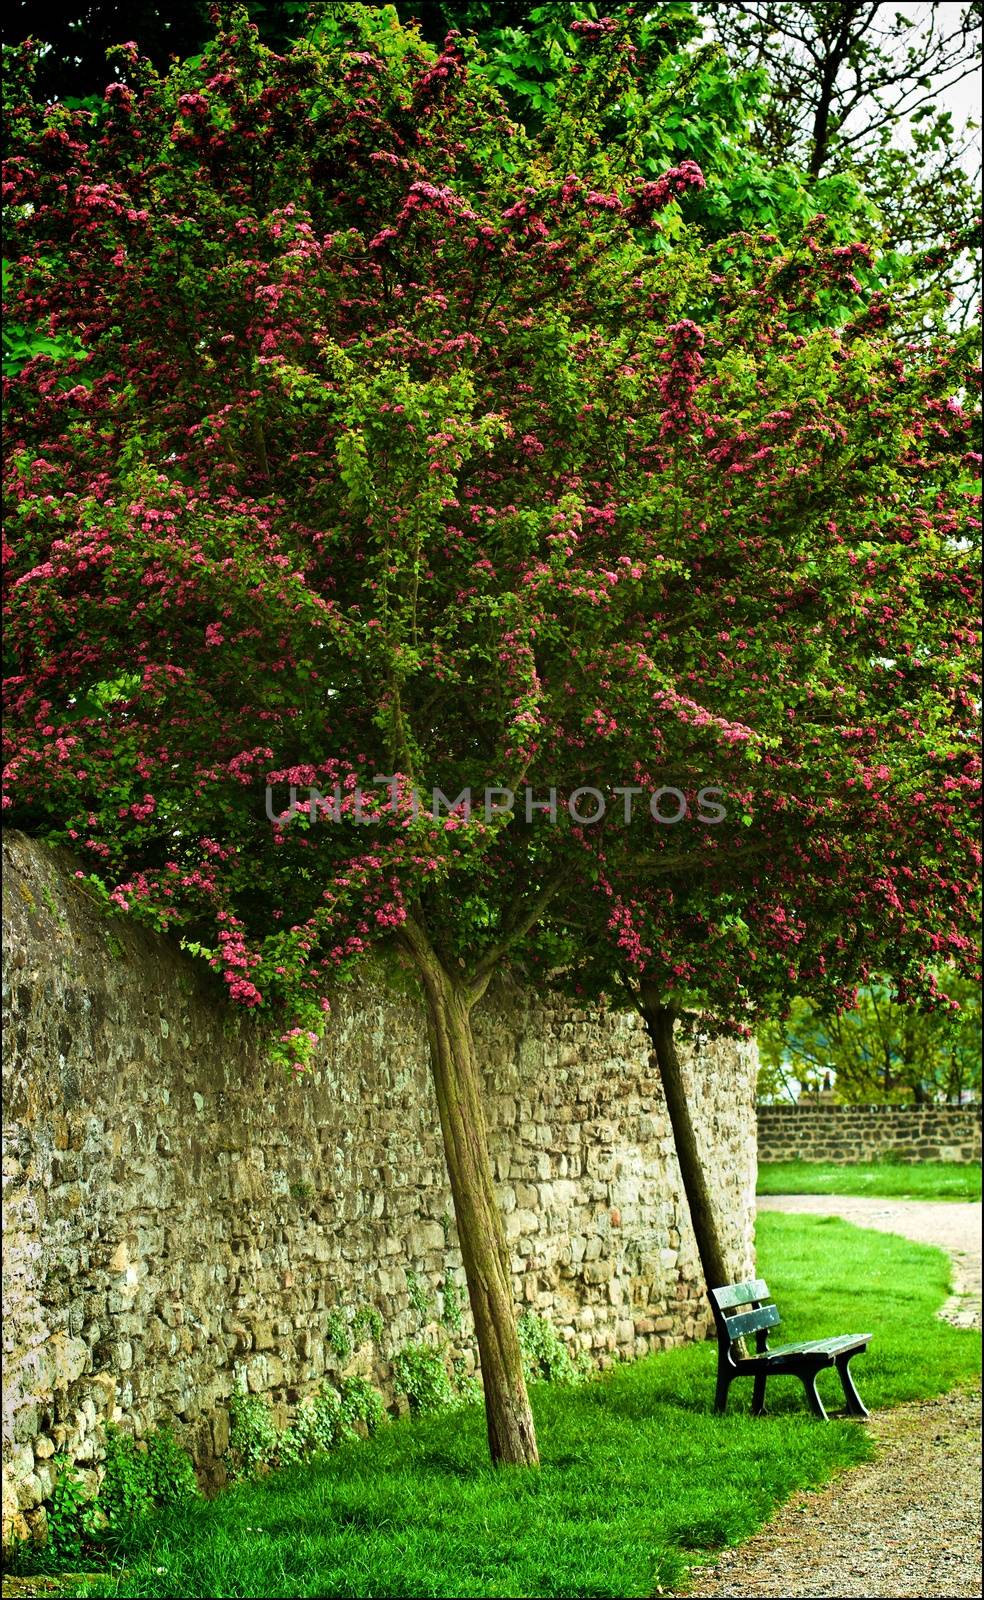 Old Alone Bench under Beauty Flowering Tree near Obsolete Stone Wall Outdoors